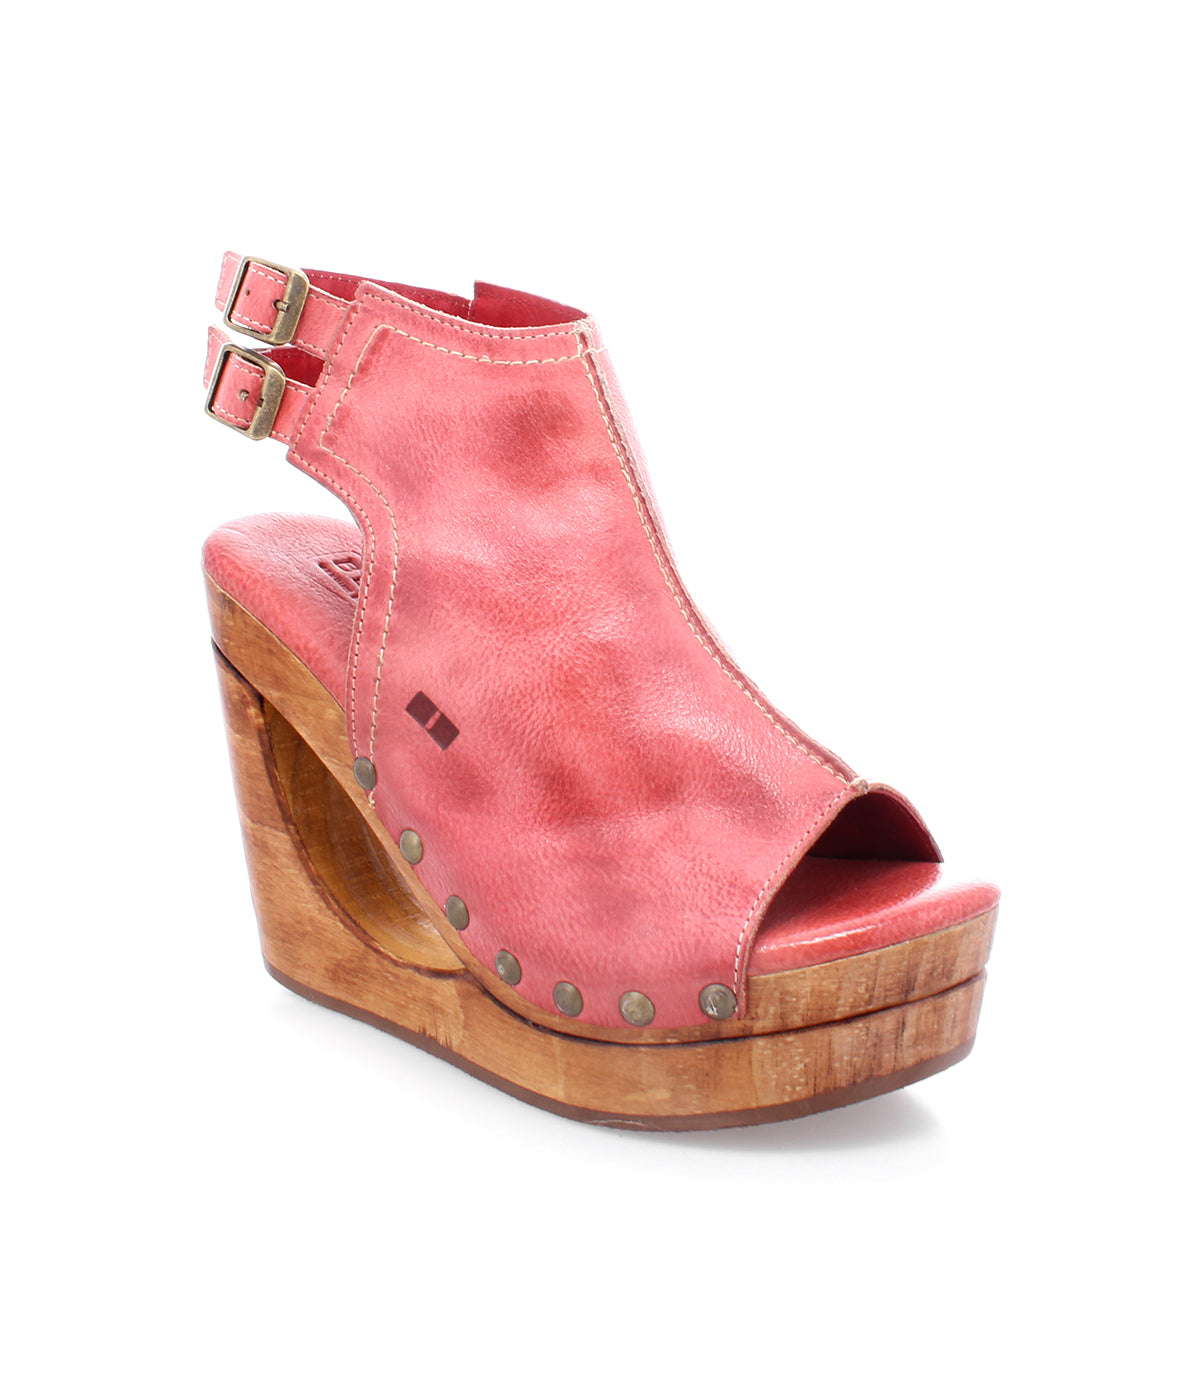 Bed Stu's Imelda open-toe wedge shoe in pink.